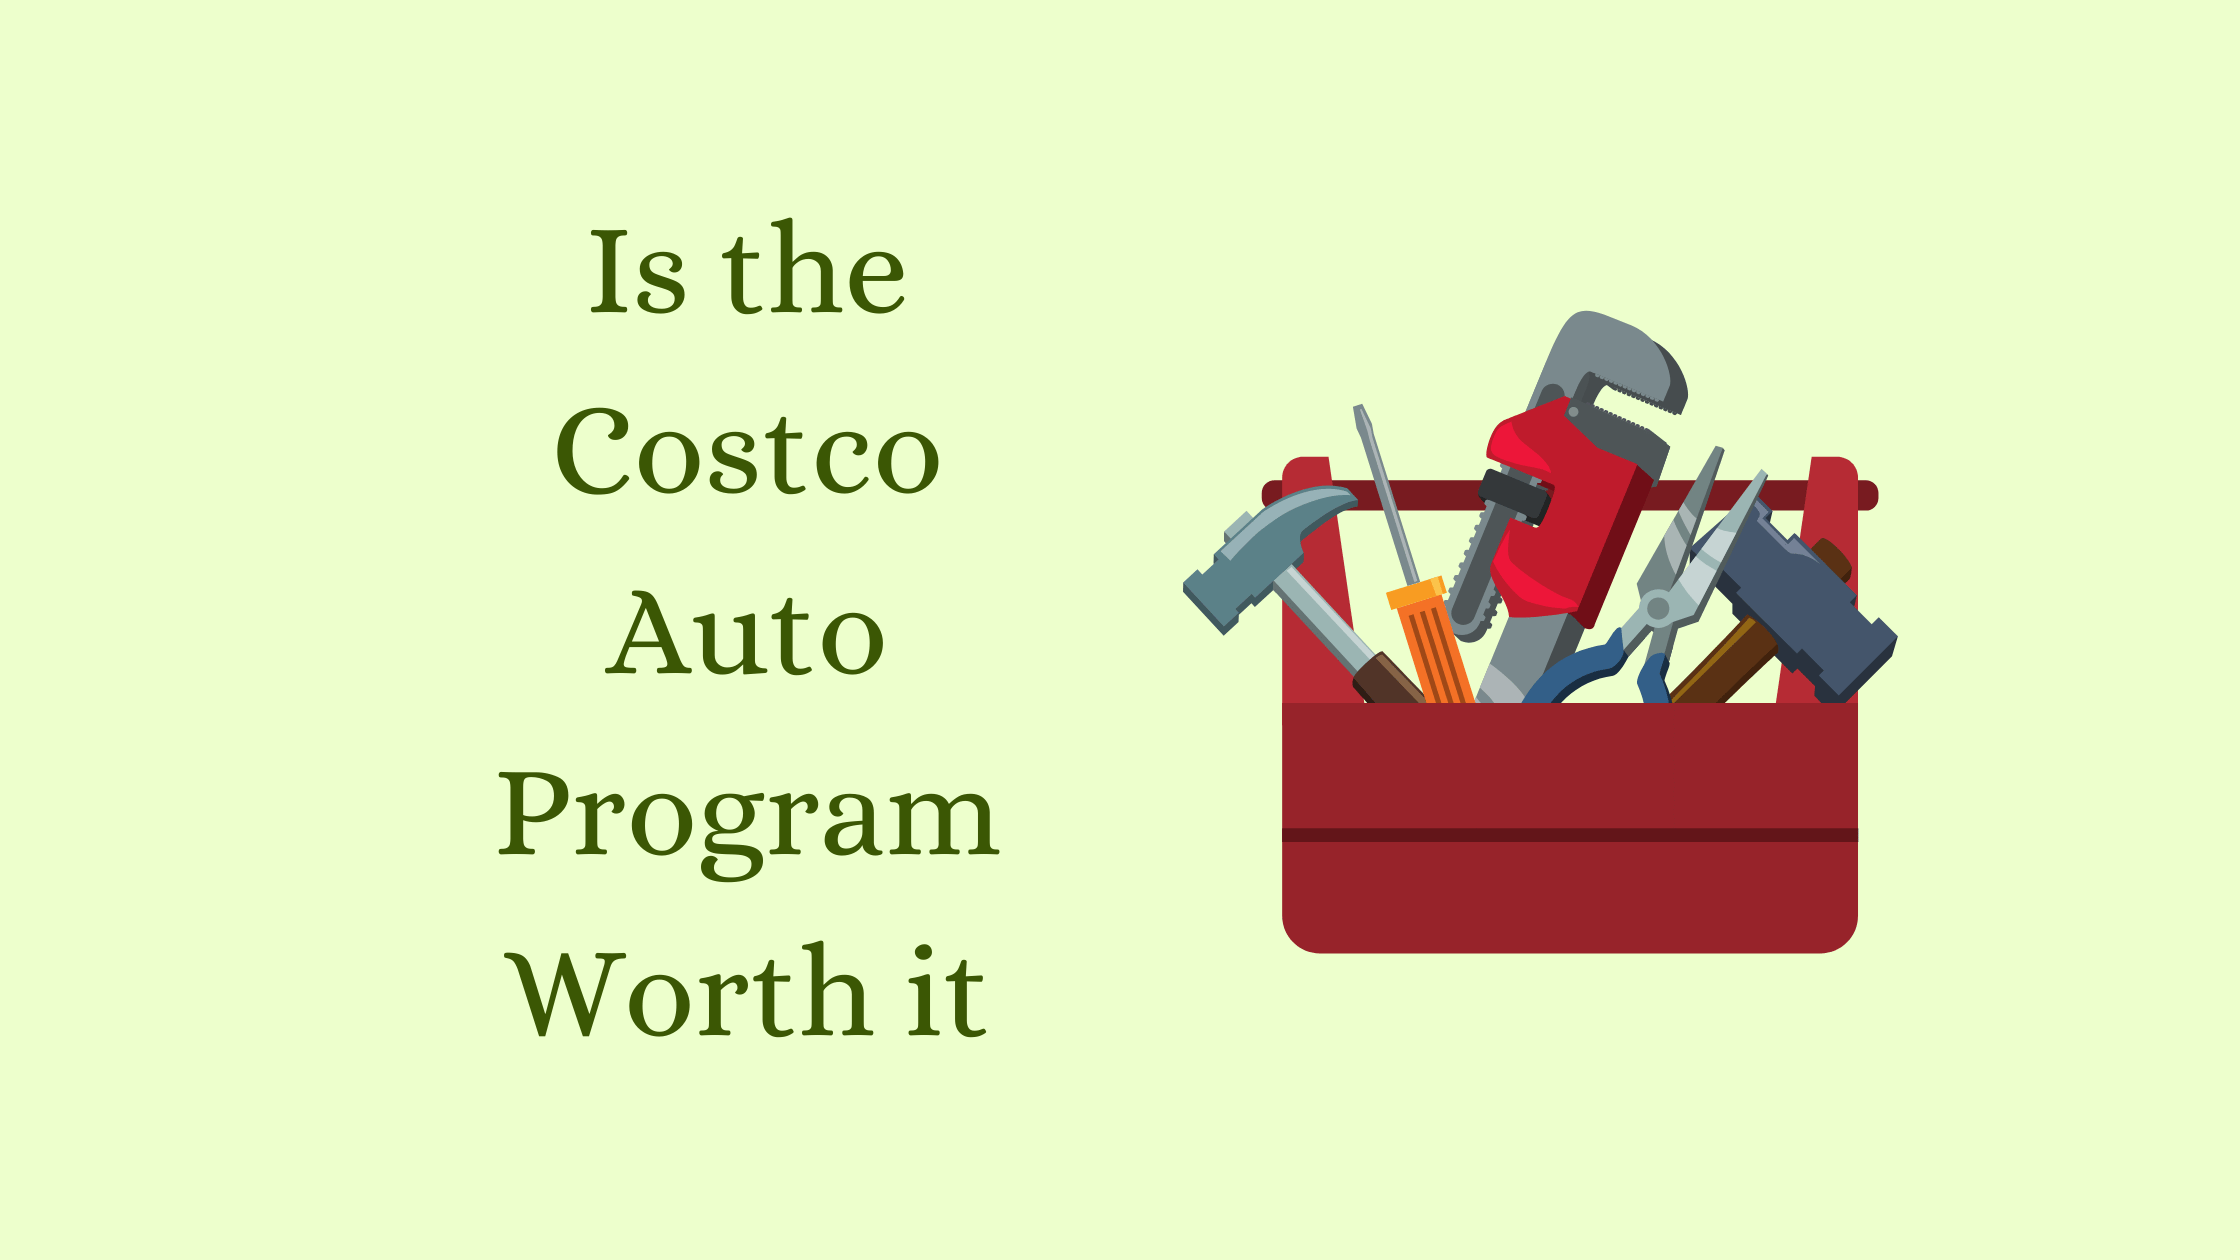 Costco Auto Program Worth it